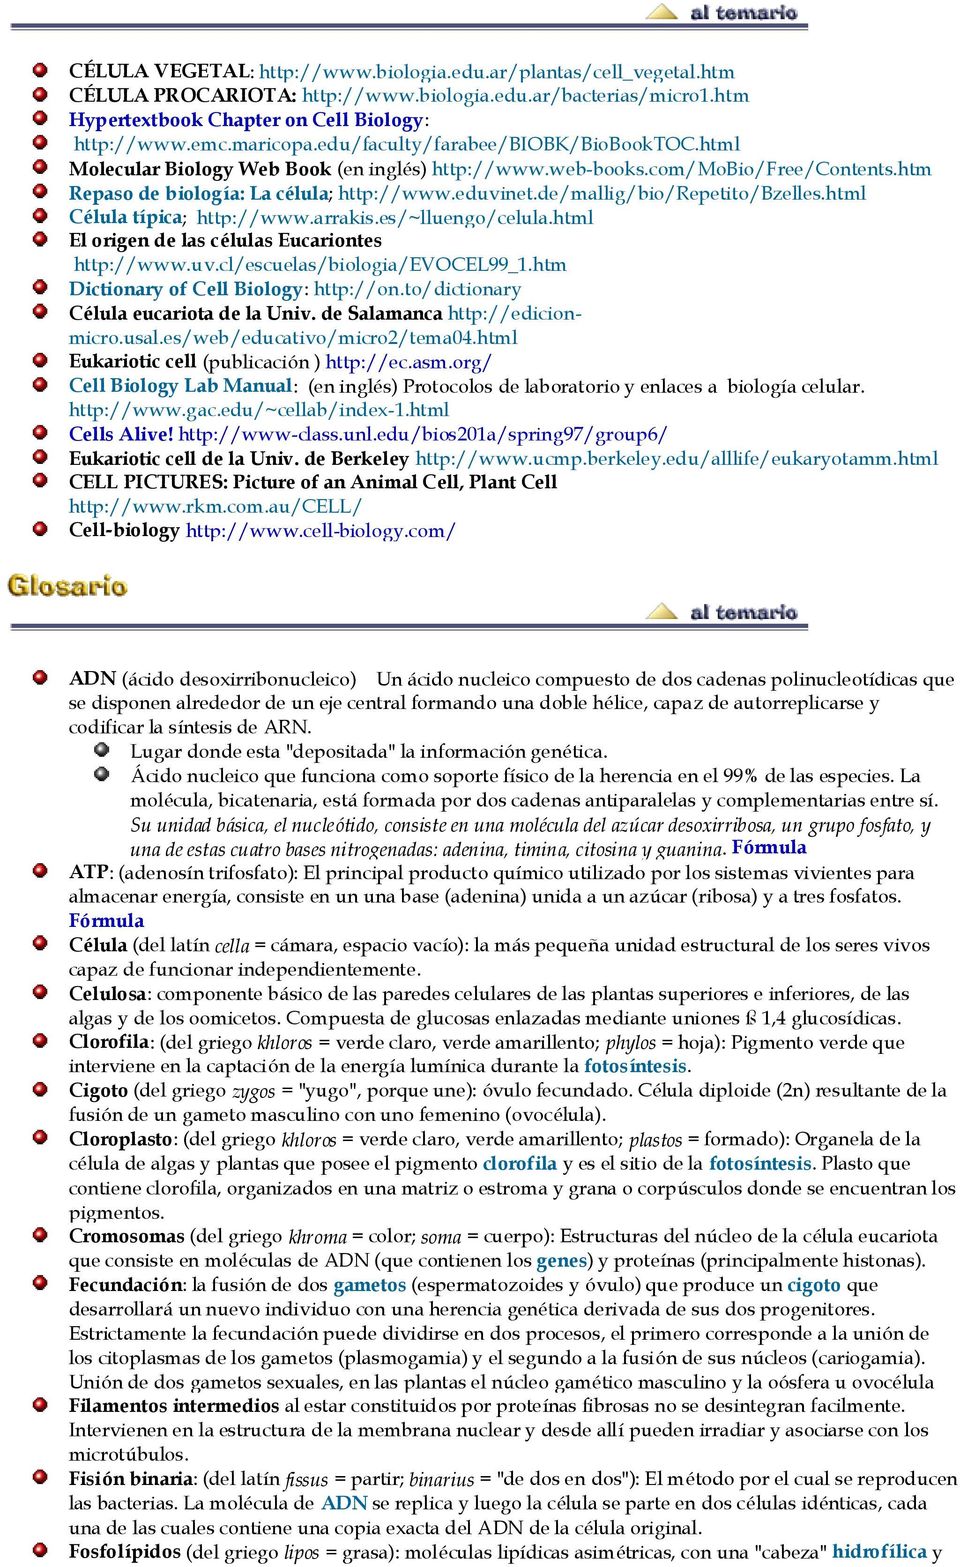 de/mallig/bio/repetito/bzelles.html Célula típica; http://www.arrakis.es/~lluengo/celula.html El origen de las células Eucariontes http://www.uv.cl/escuelas/biologia/evocel99_1.